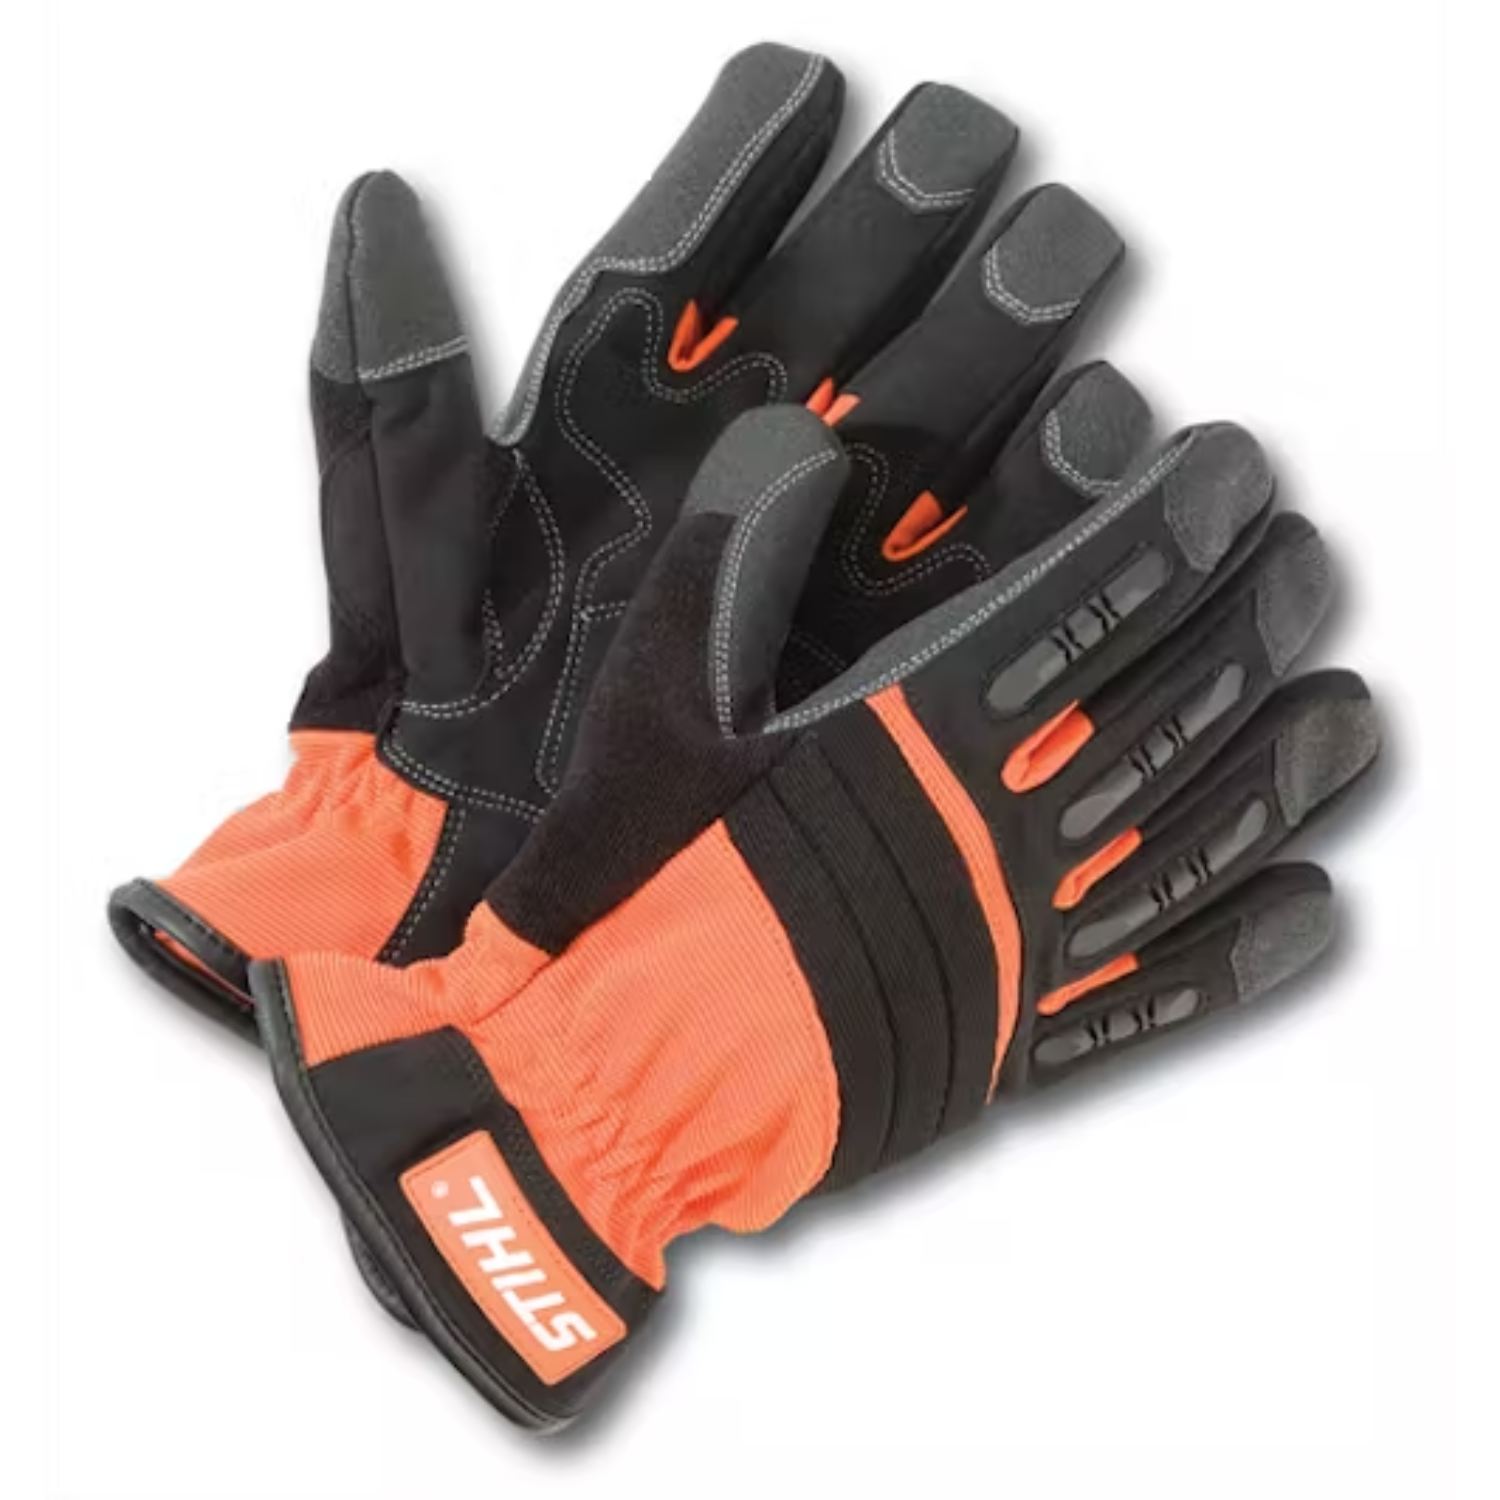 Stihl High Performance PRO Gloves